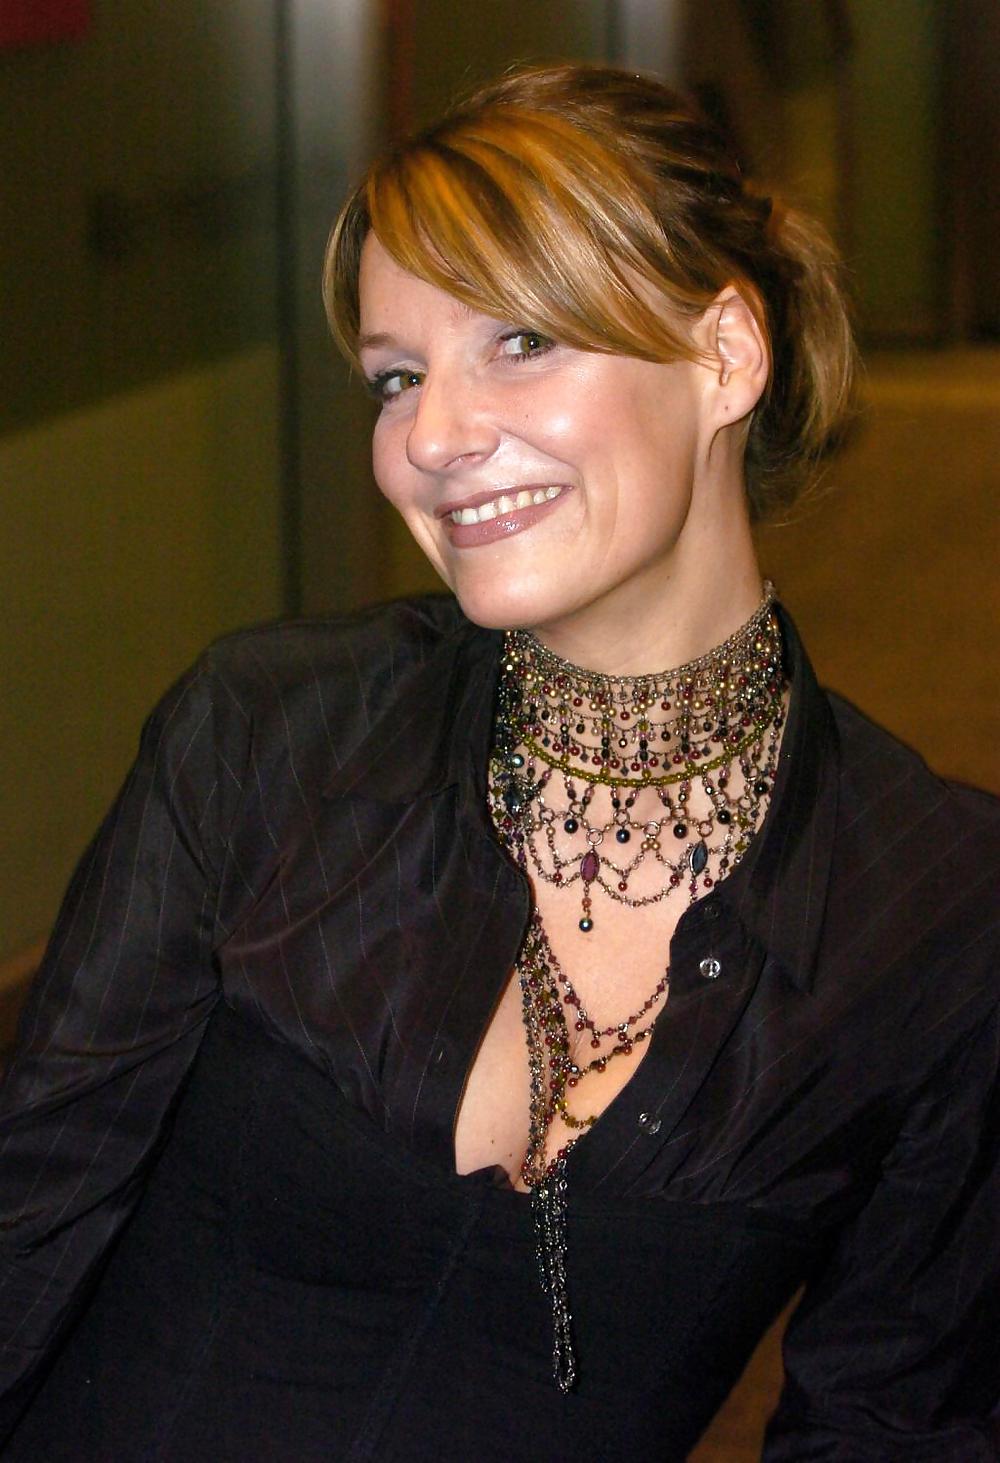 Sex Gallery Kim Fisher - German TV Host